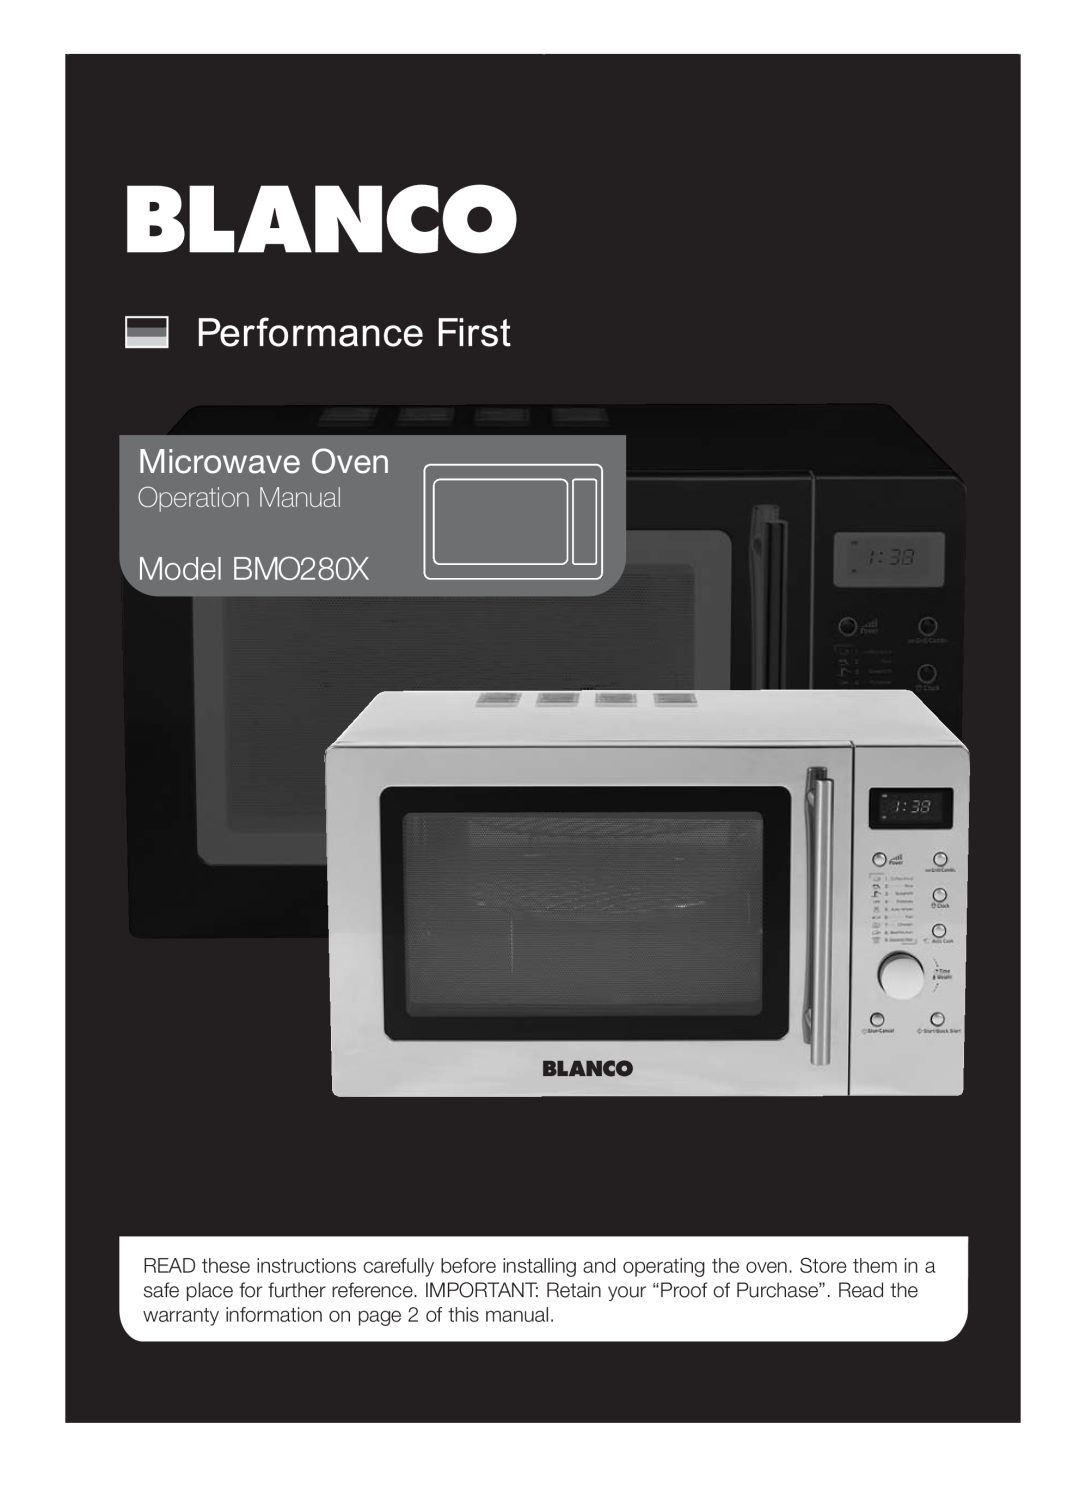 Blanco B 830FX operation manual Microwave Oven, Model BMO280X 